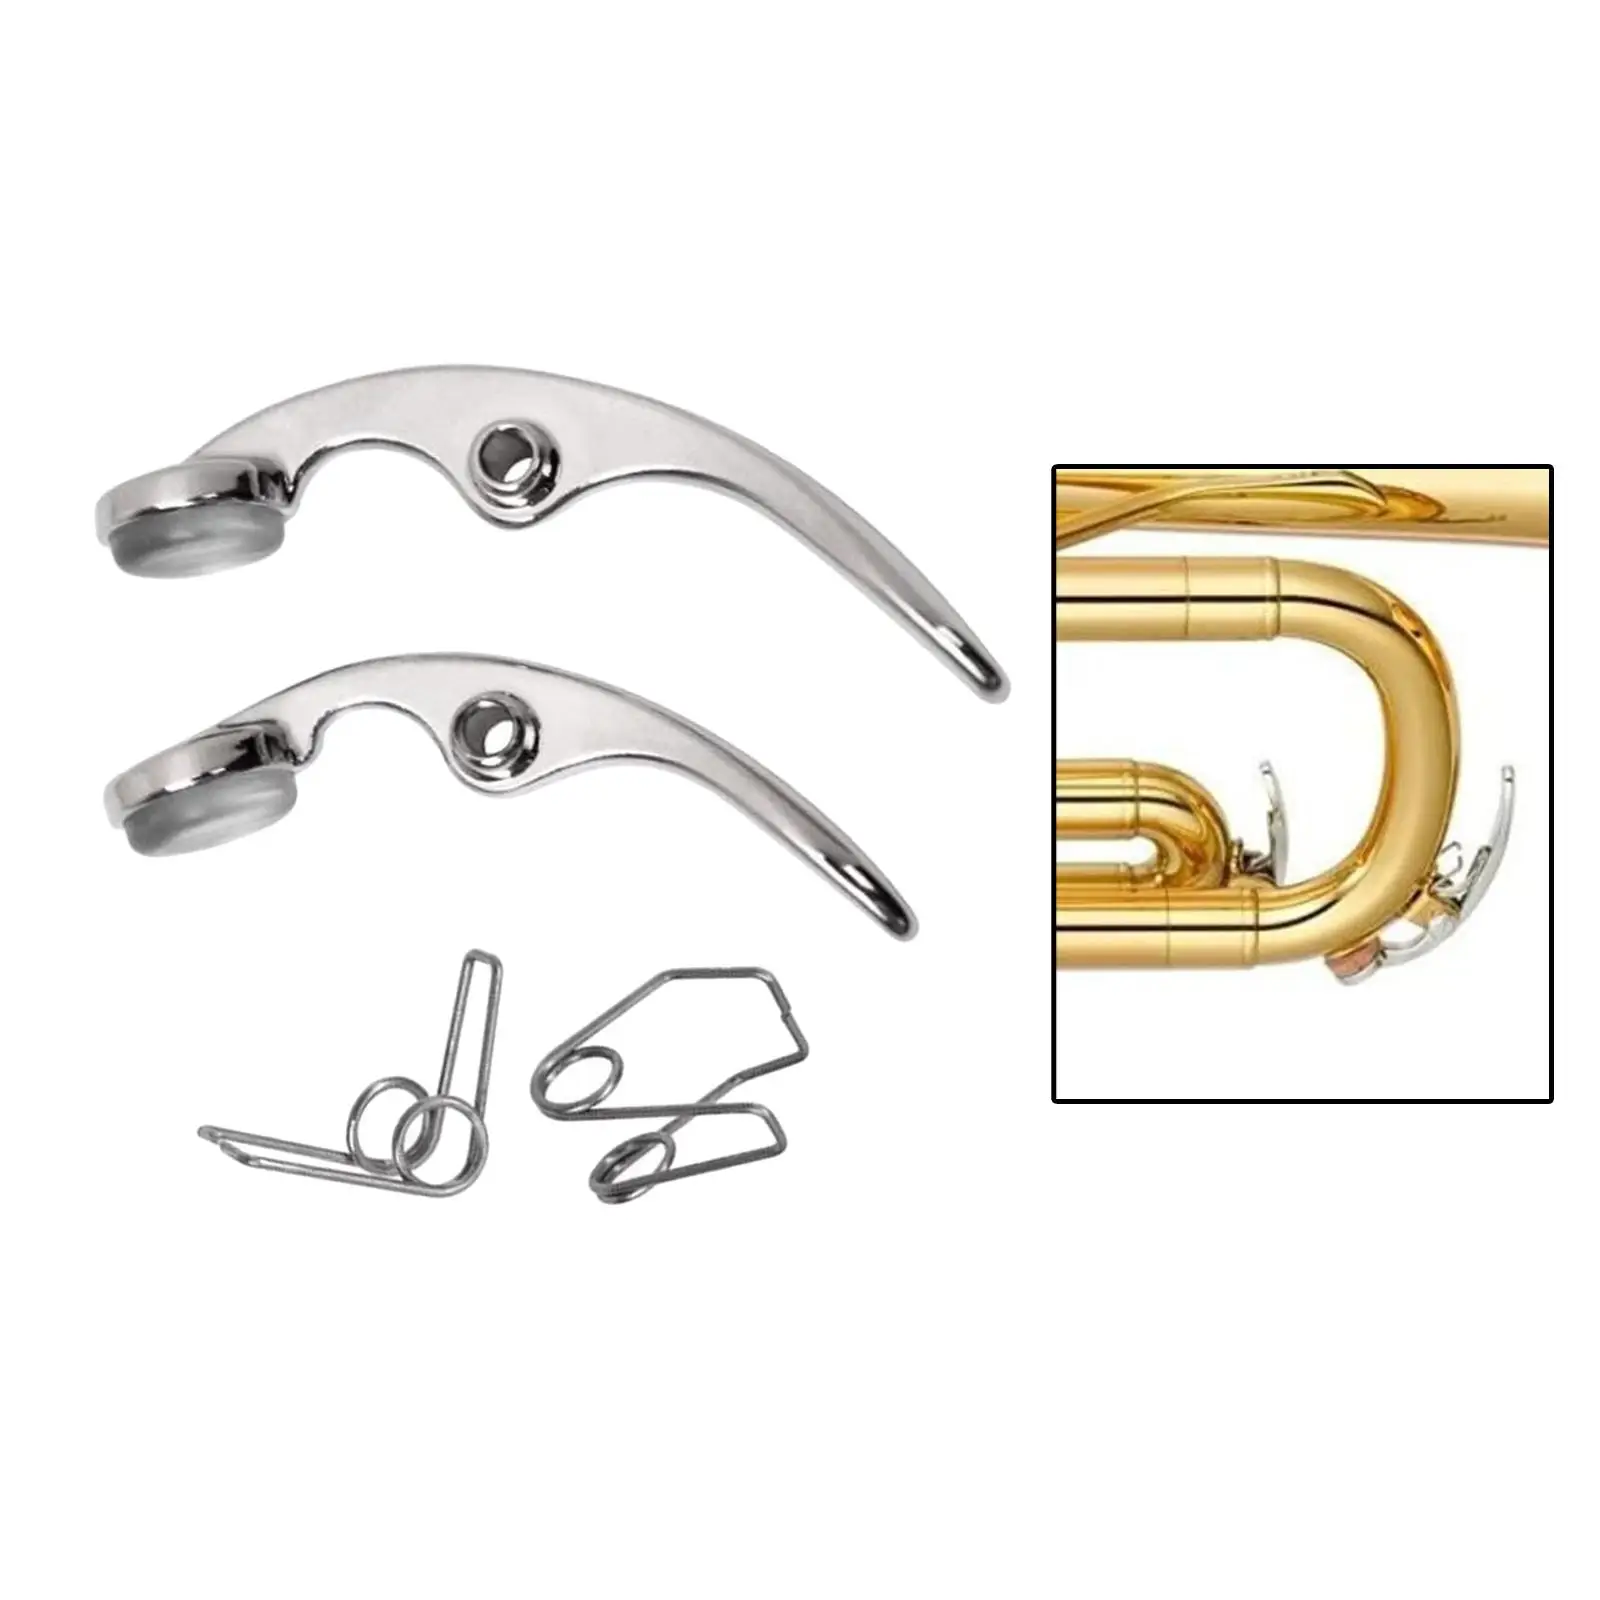 Trumpet Spit Valve Portable Trumpet Accessory Replacement Parts for Trumpet Wind Instrument Trombone Brass Instrument Repairing